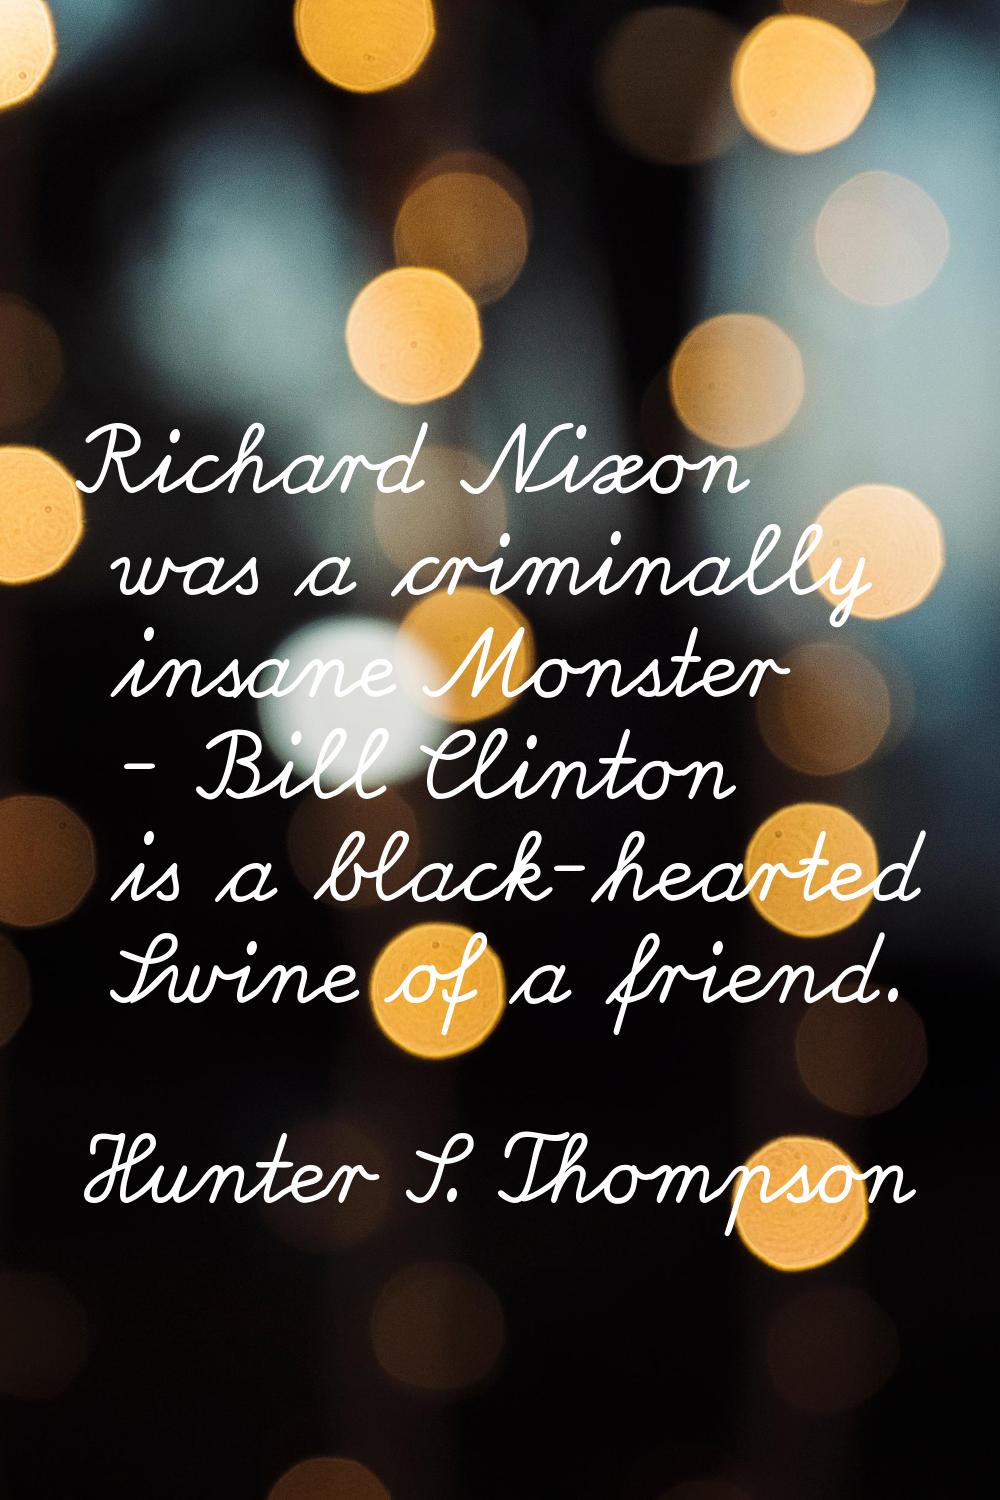 Richard Nixon was a criminally insane Monster - Bill Clinton is a black-hearted Swine of a friend.